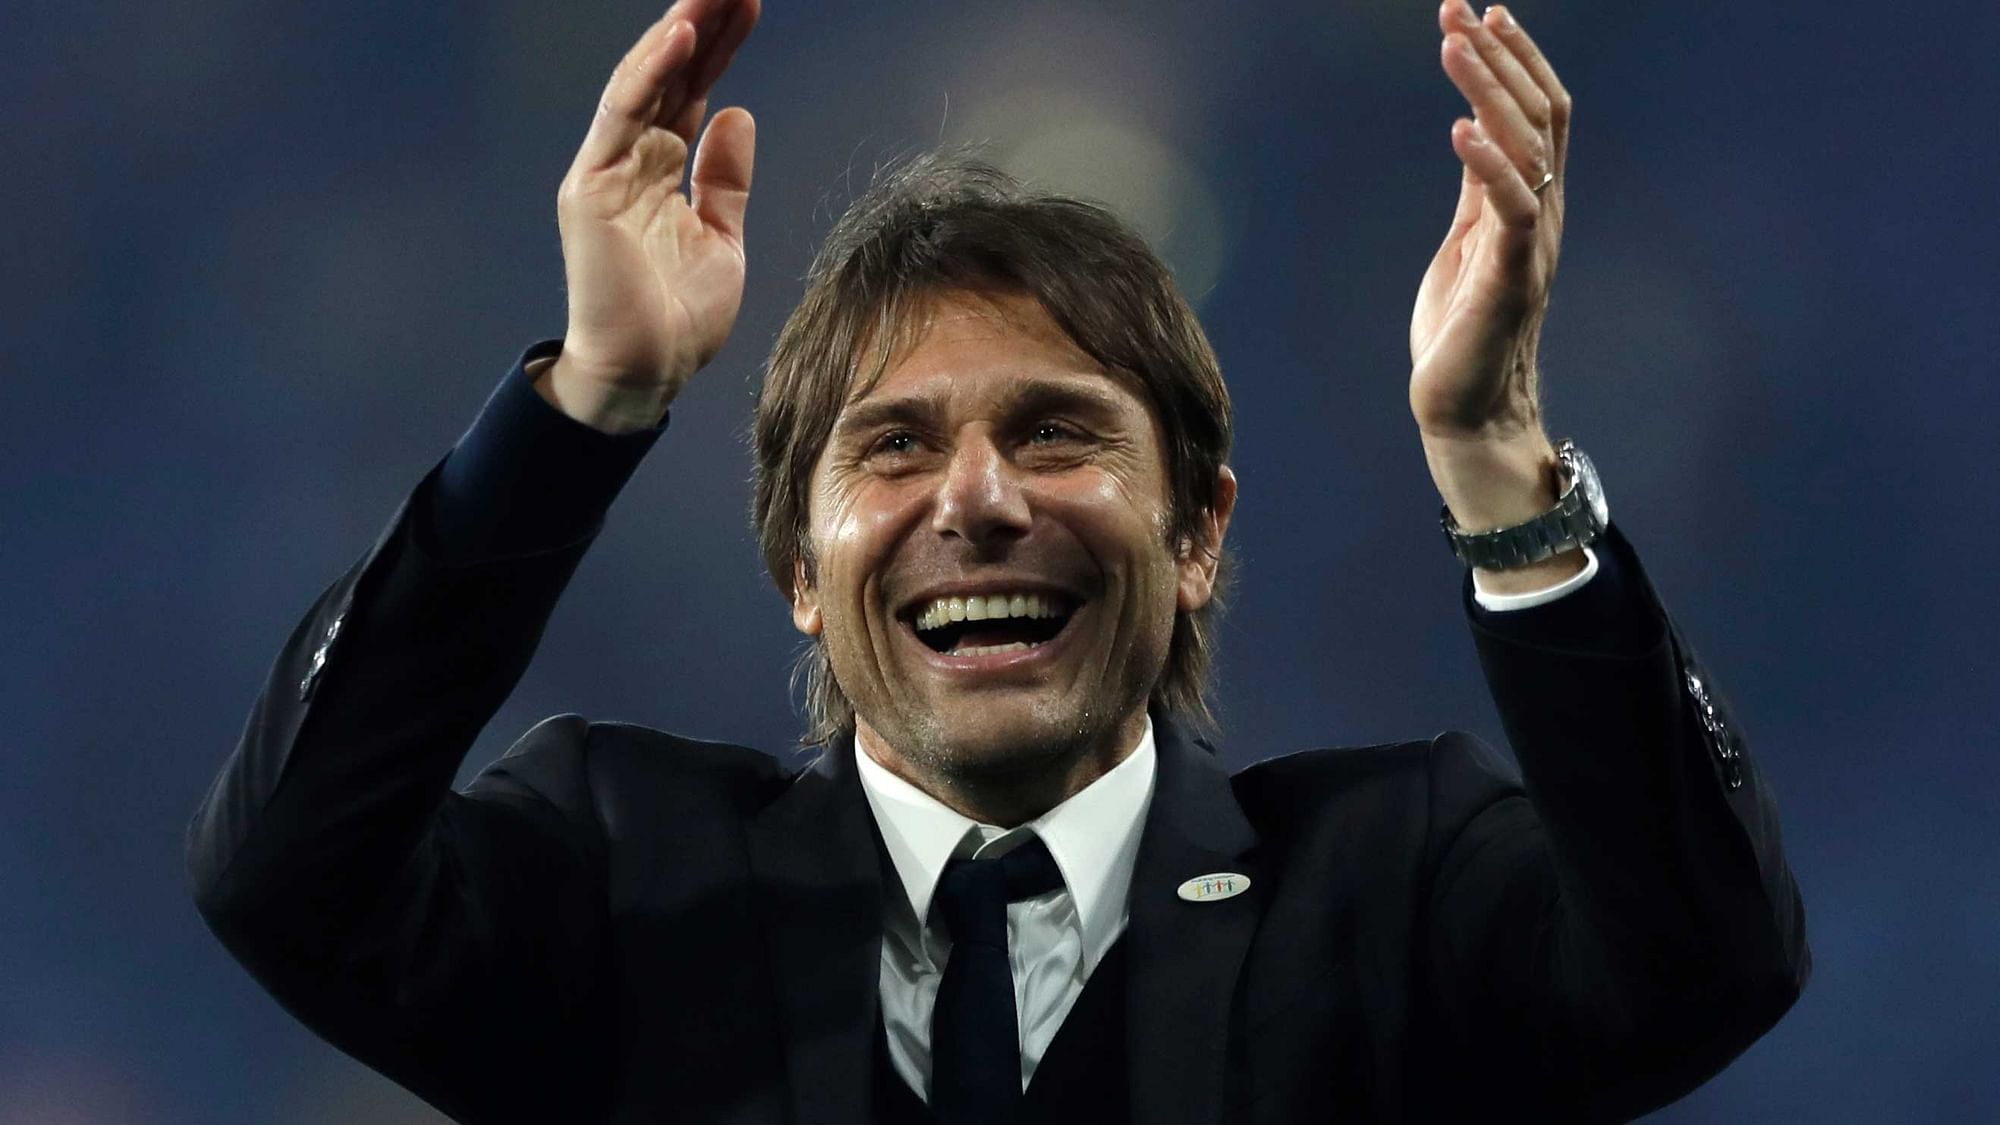 Chelsea’s manager Antonio Conte celebrates during an English Premier League match